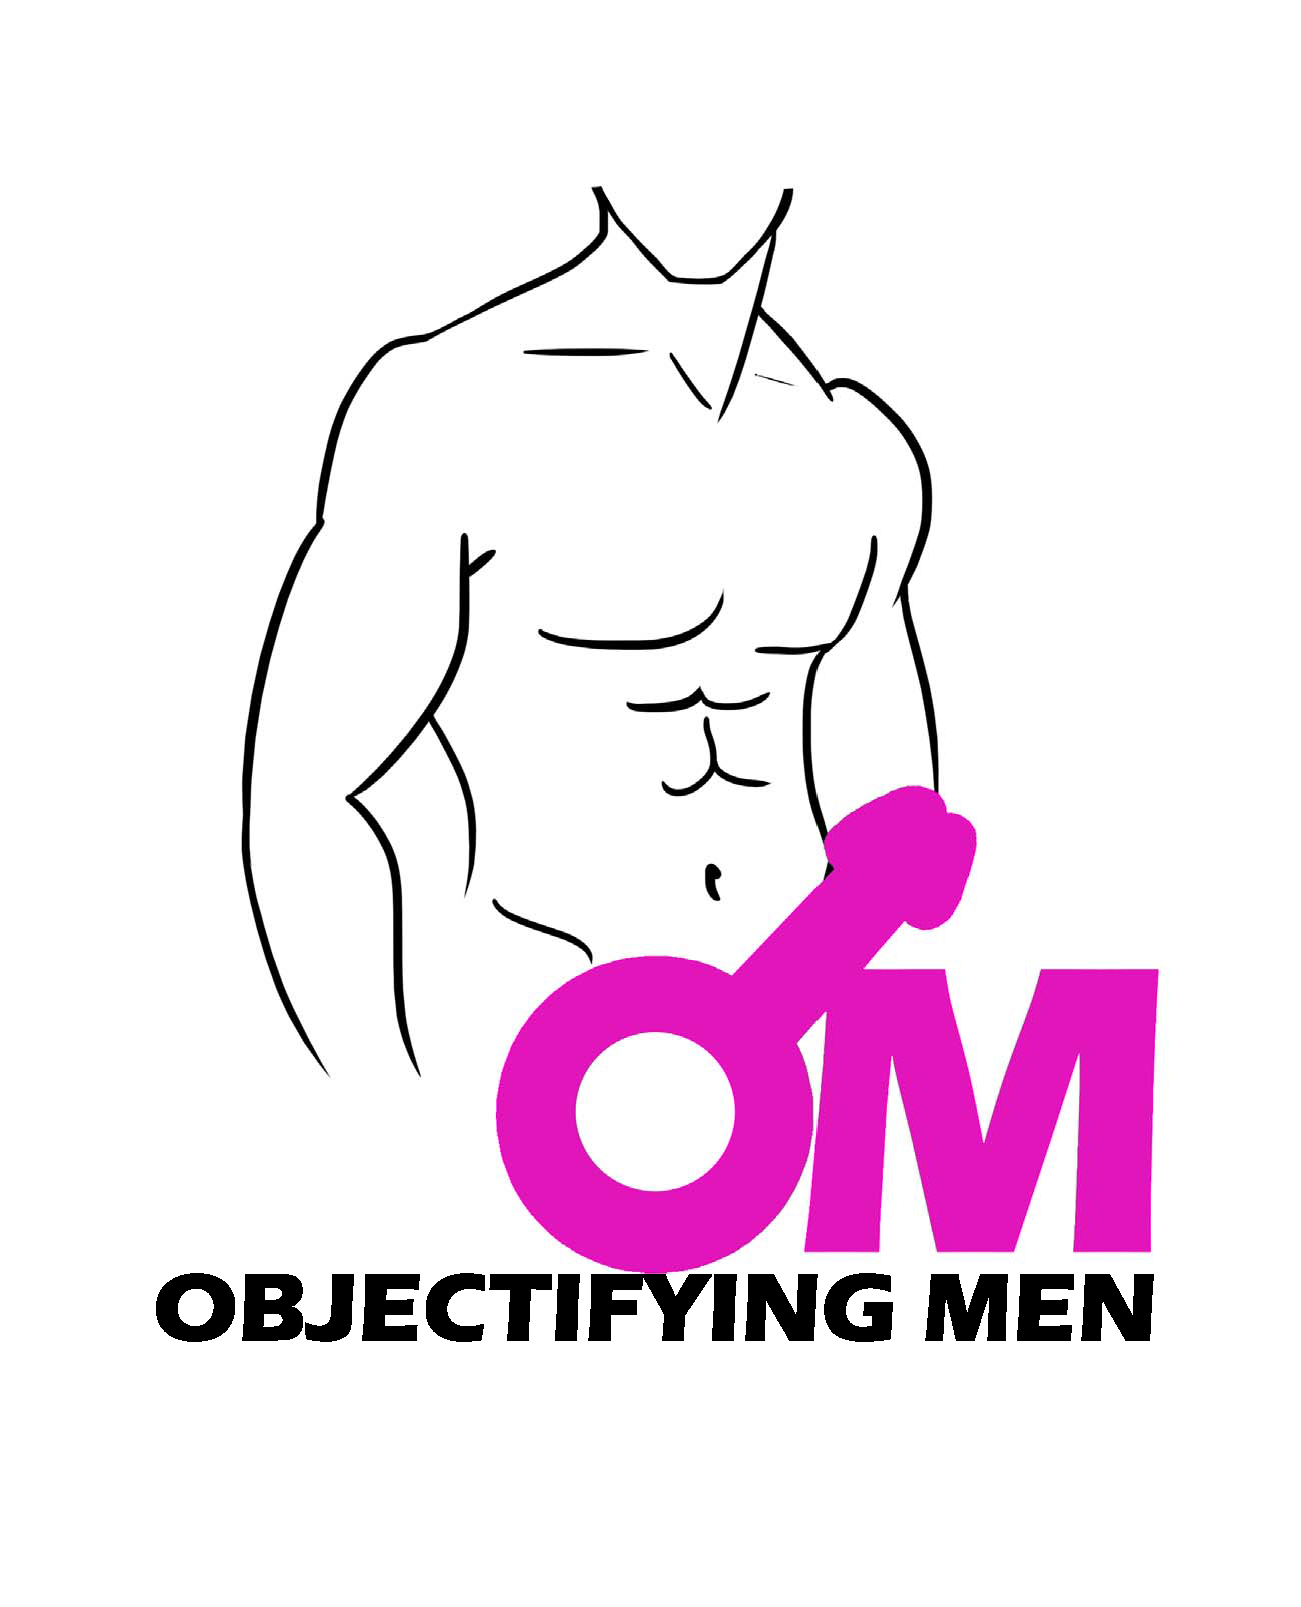 objectifying men logo eps.png